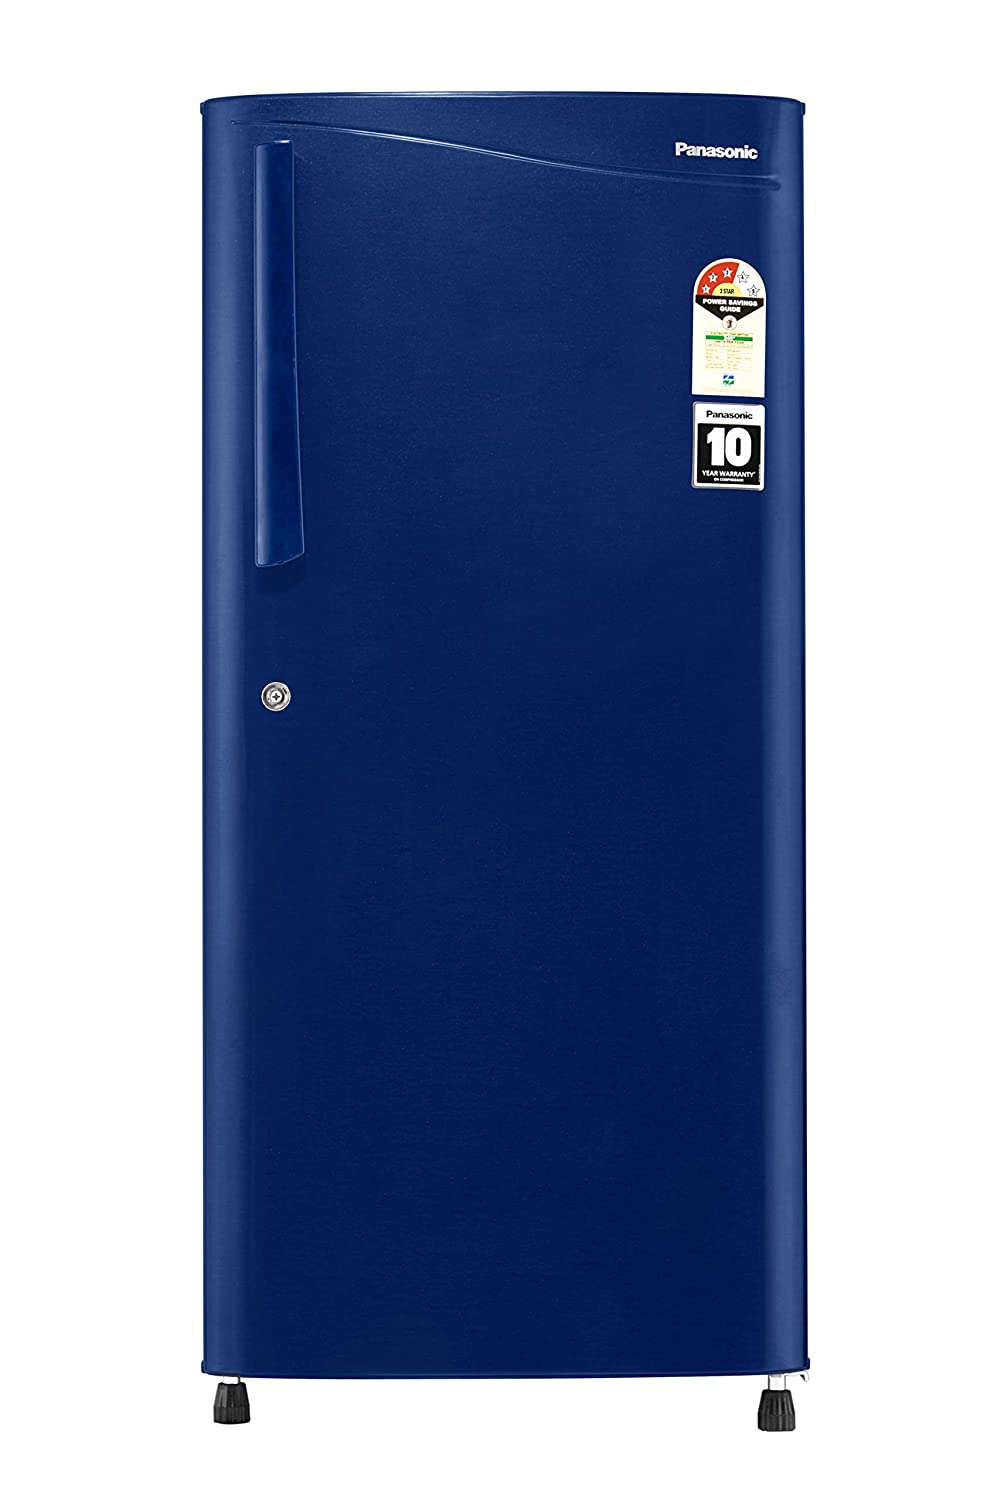 Panasonic 194 L 3 Star Inverter Direct-cool Single Door Refrigerator Nr-a193vax1 Blue Hairline